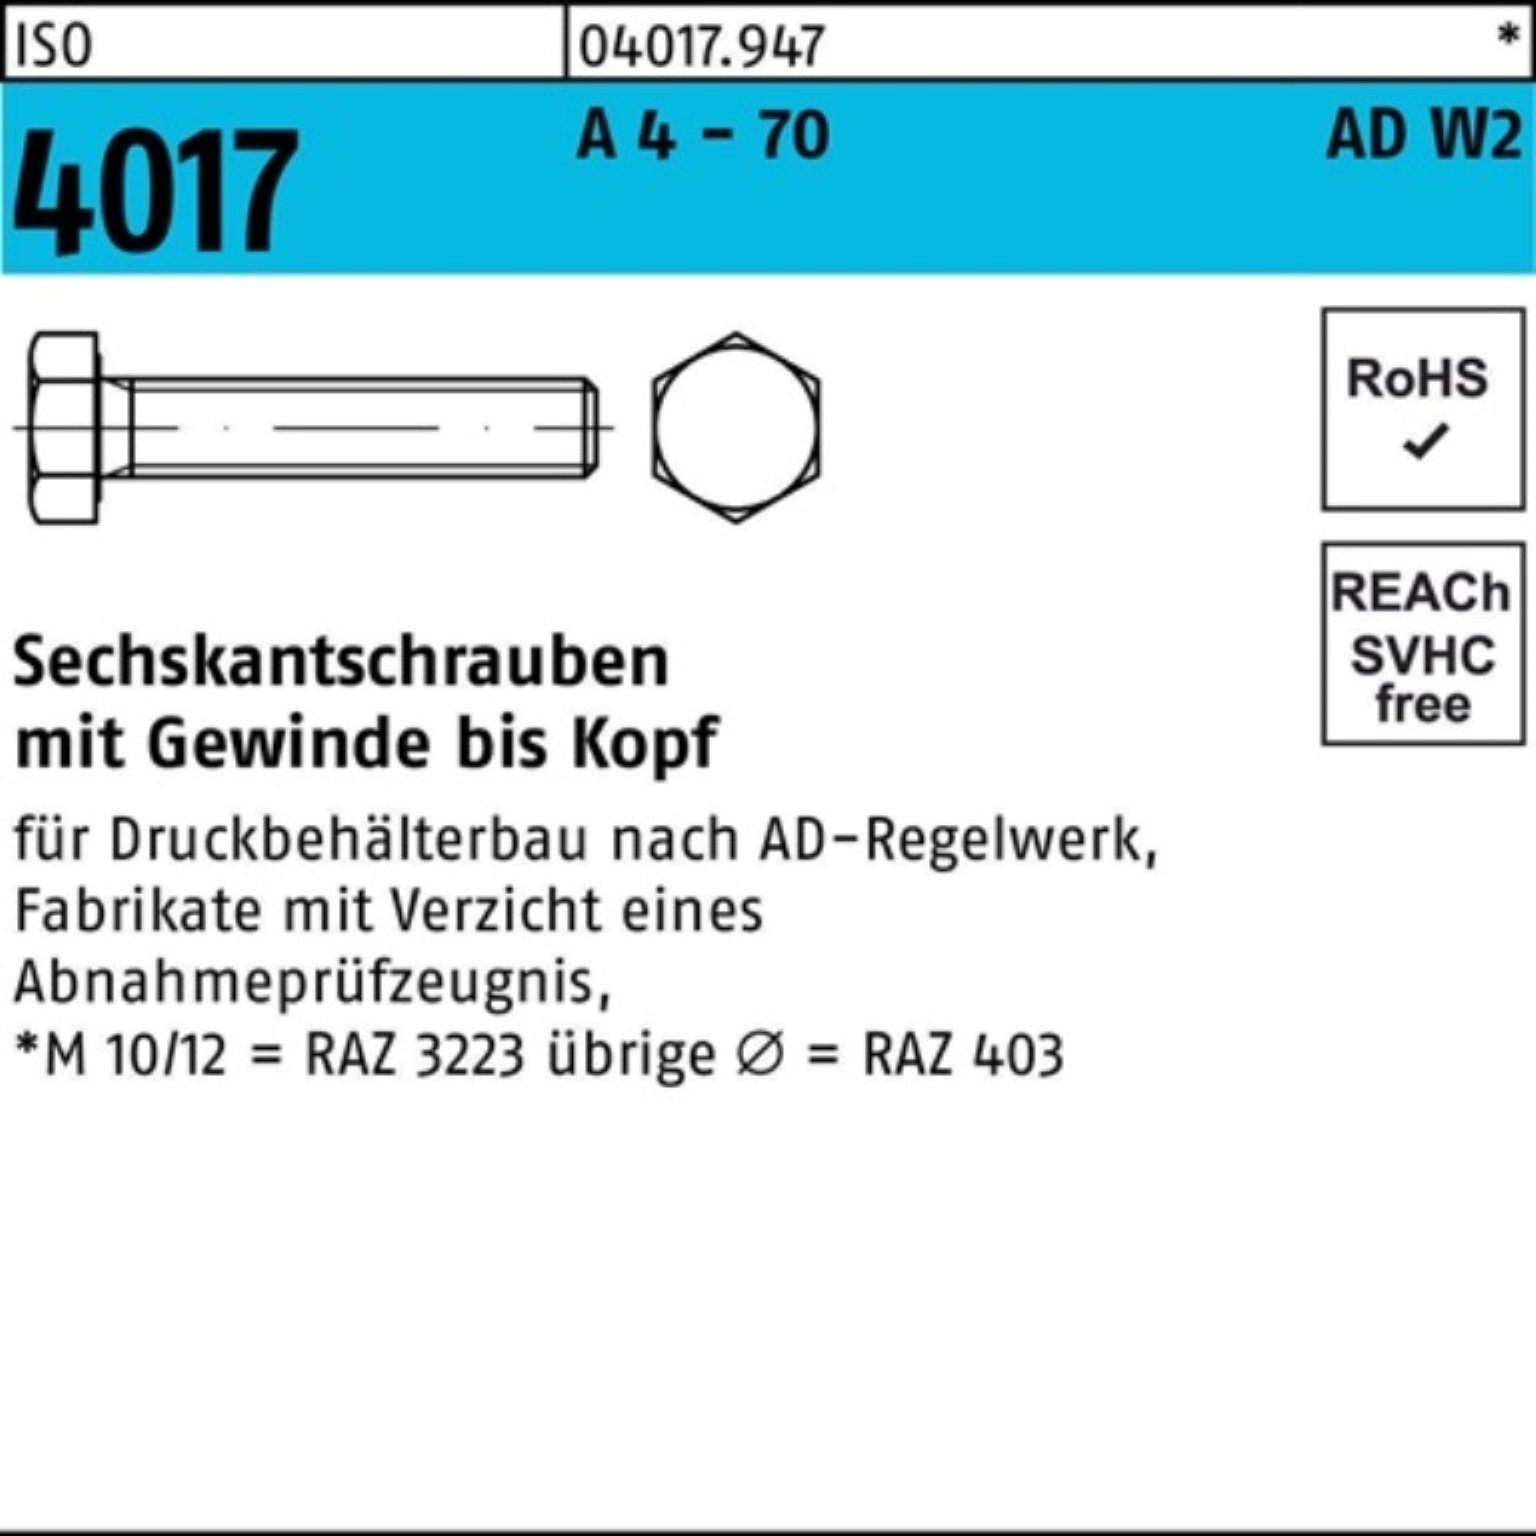 Bufab Sechskantschraube 100er Pack Sechskantschraube - 60 M10x VG St 4 4017 AD-W2 A 70 ISO 100